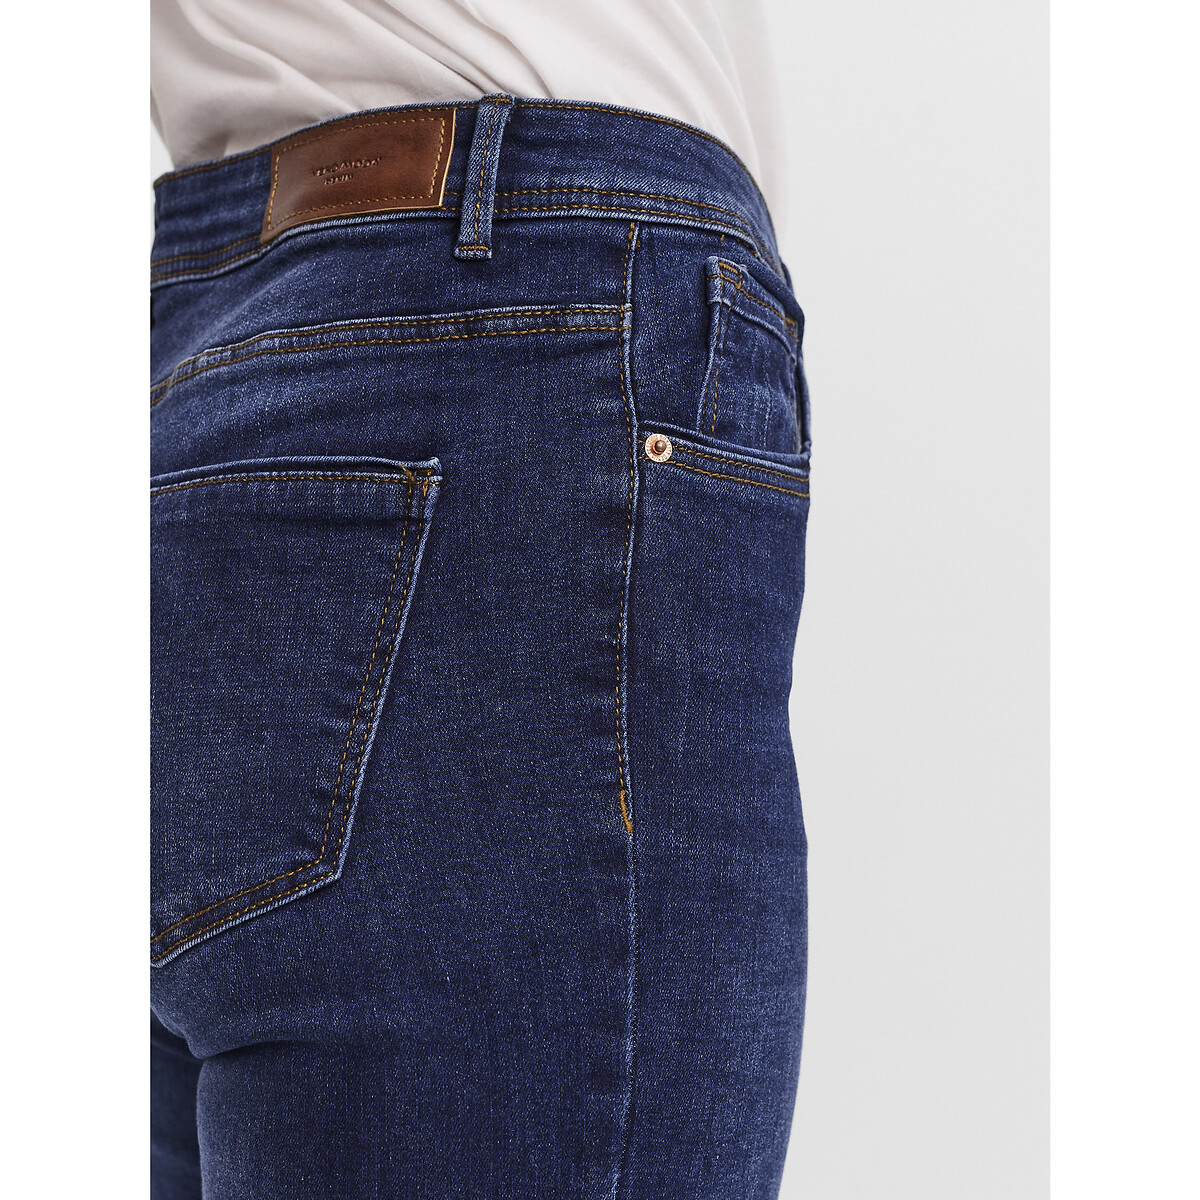 Jeans flare, cintura standard dark blue Vero Moda